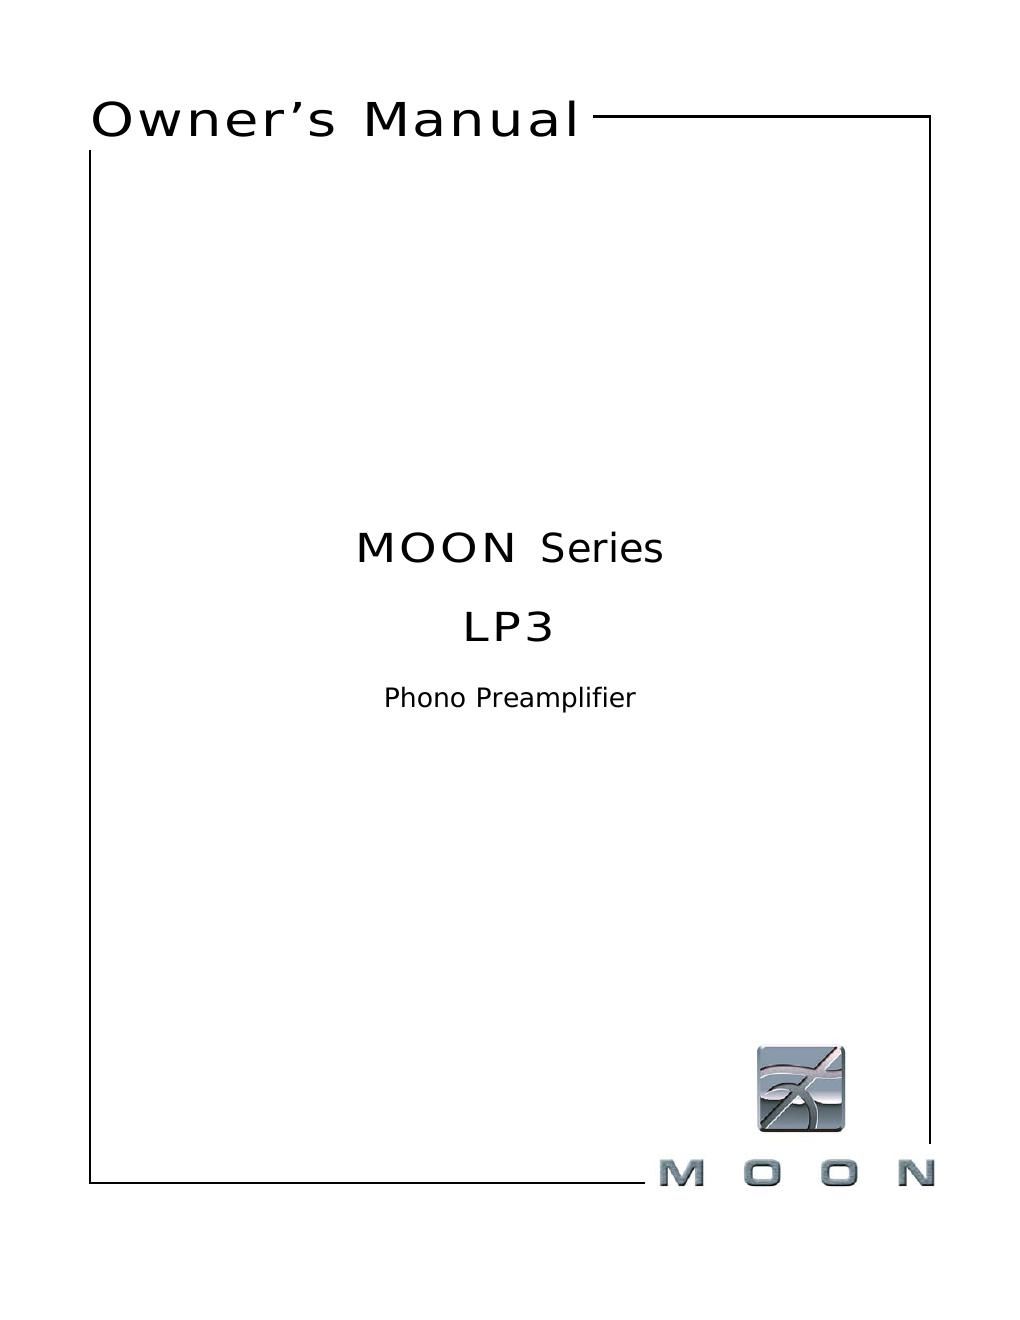 moon lp 3 owners manual